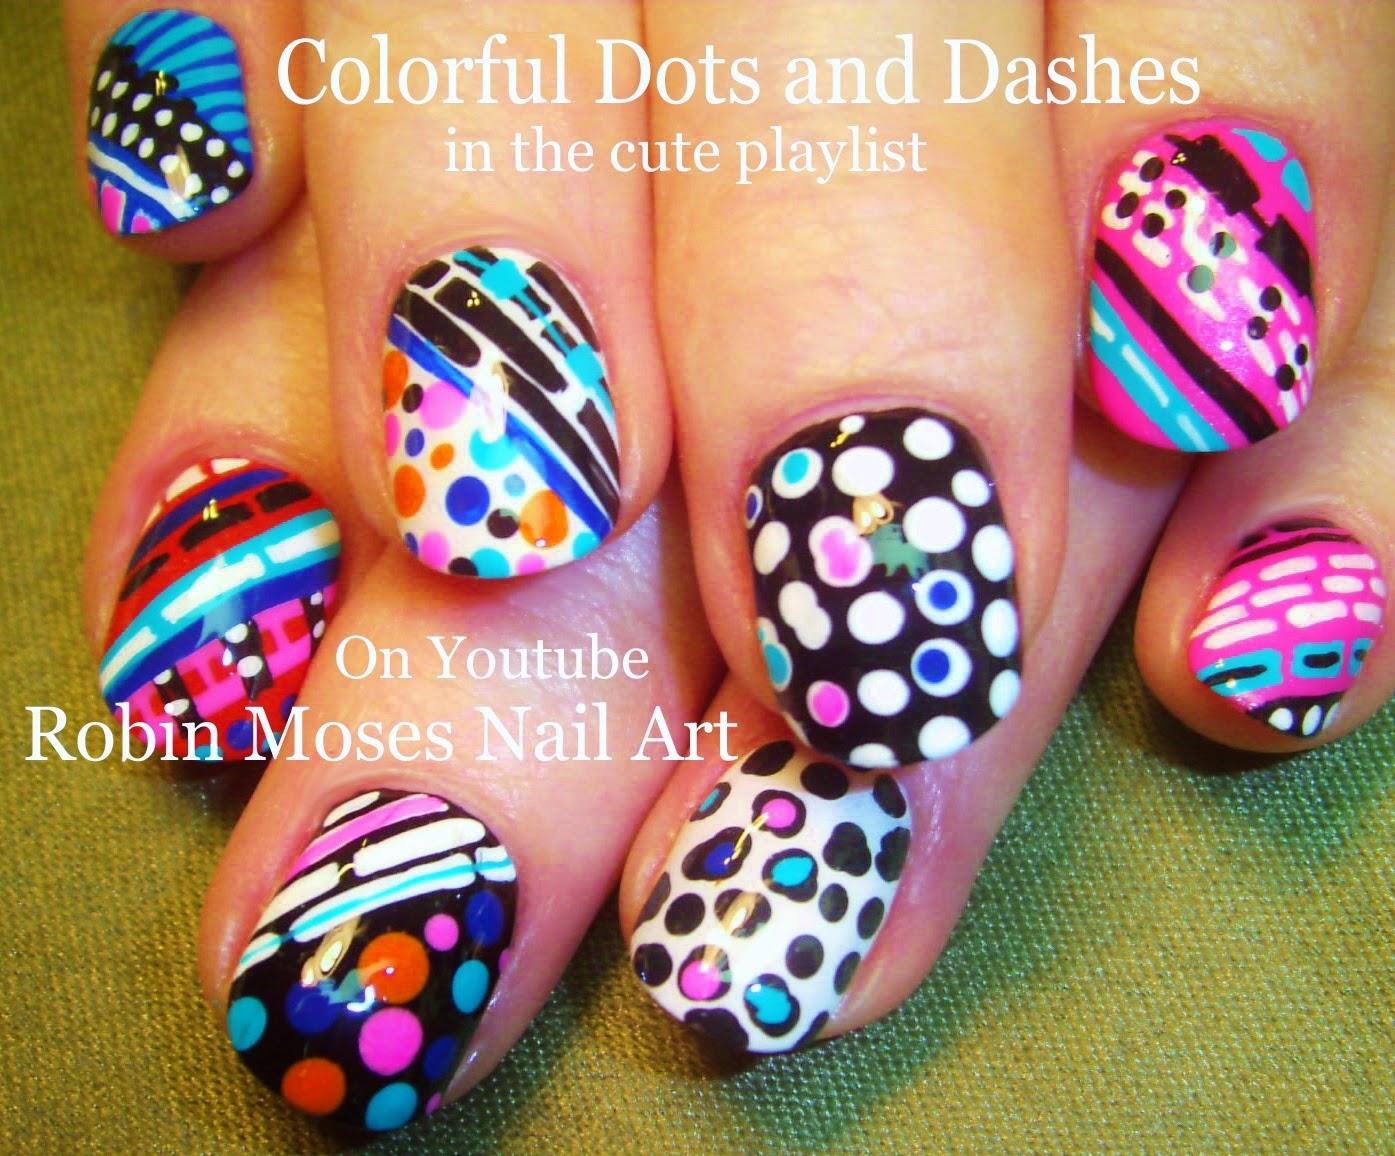 4. Cute Polka Dot and Striped Nail Ideas - wide 5